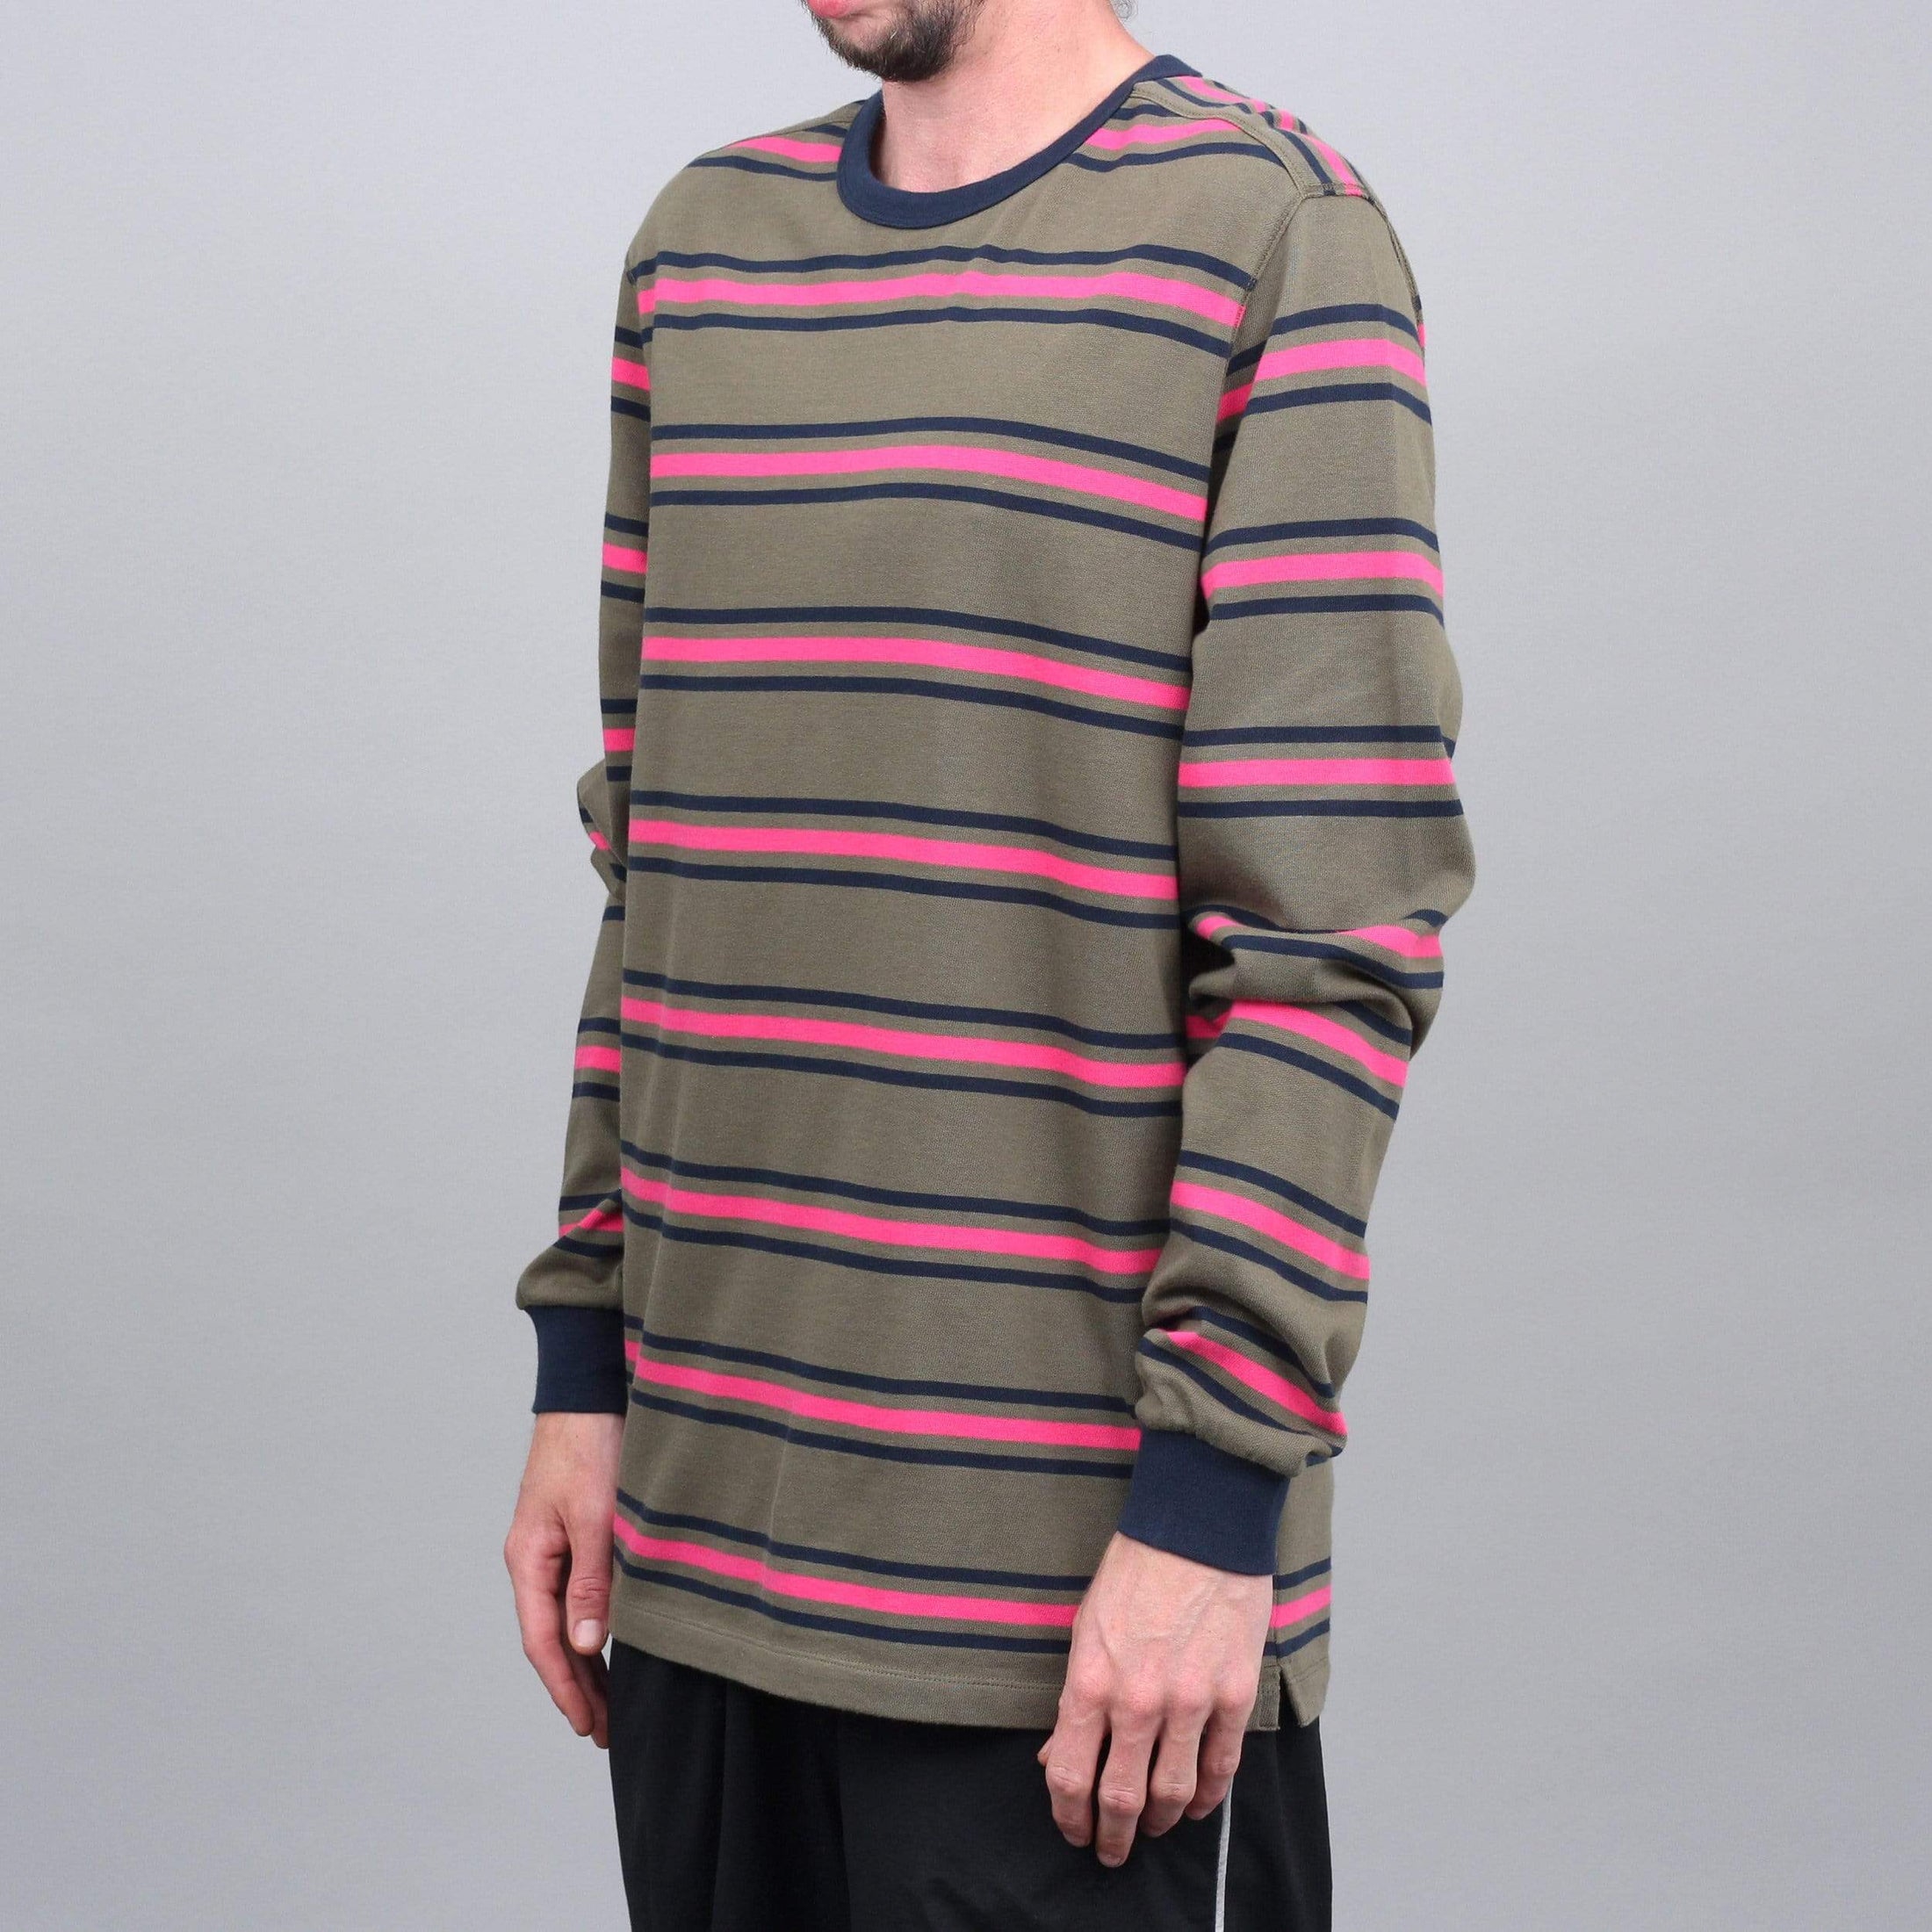 Pop Trading Harold Stripe Longsleeve T-Shirt Combat / Pink